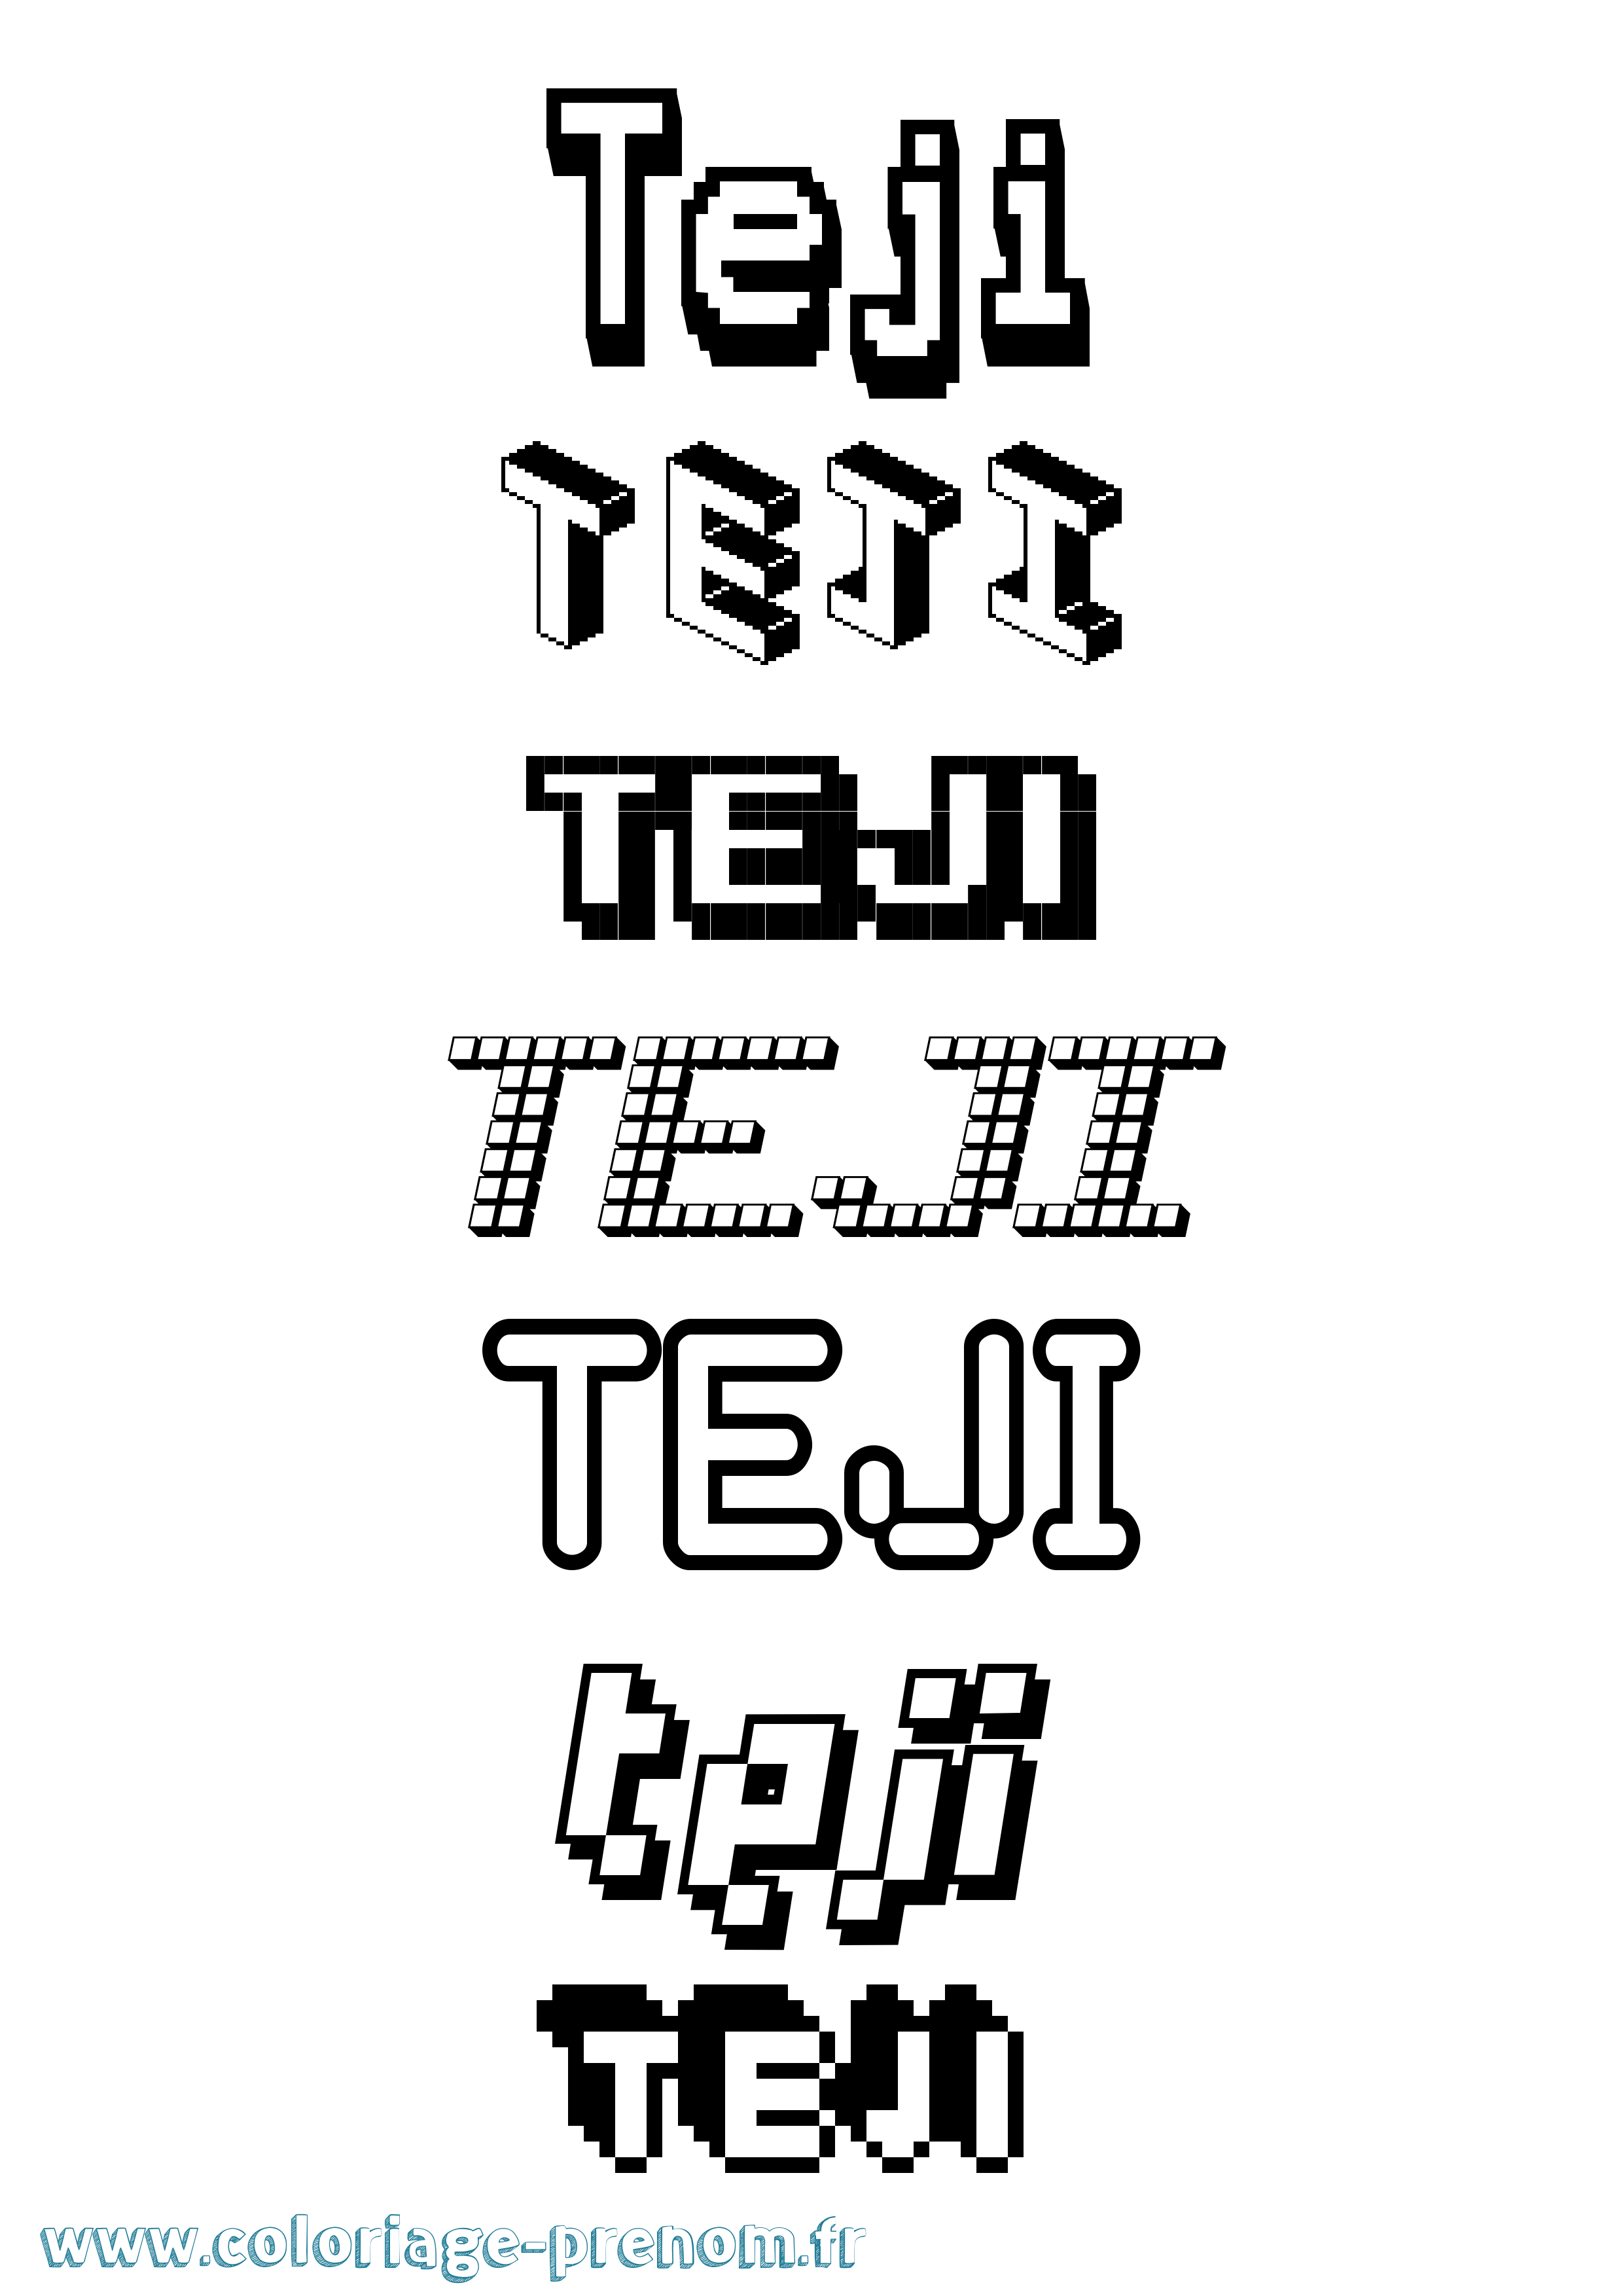 Coloriage prénom Teji Pixel